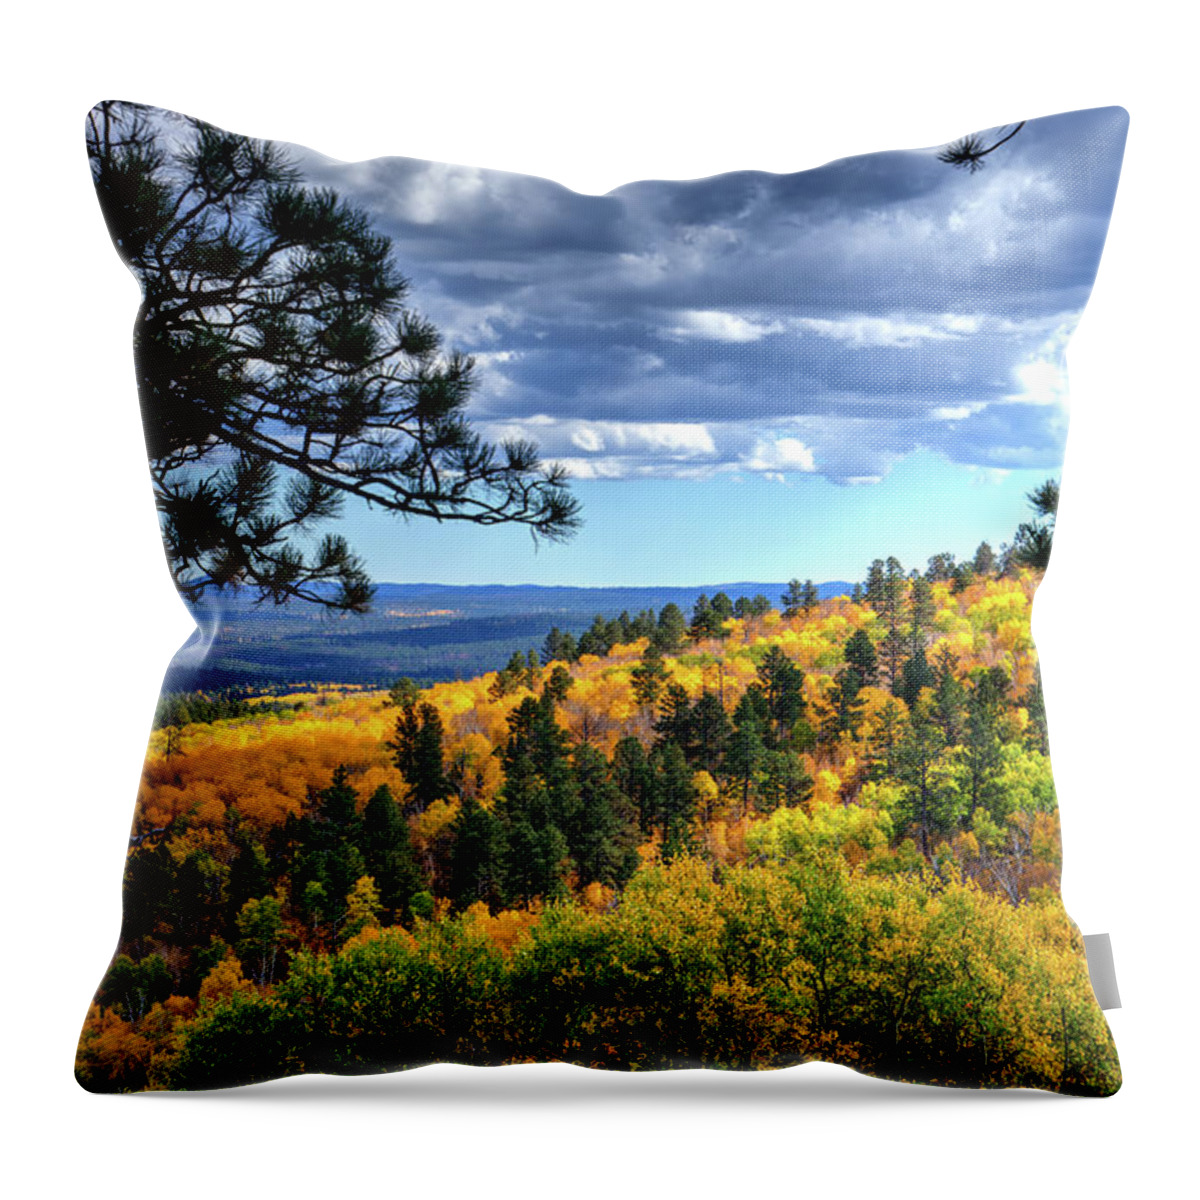 Autumn Throw Pillow featuring the photograph Black Hills Autumn by Fiskr Larsen